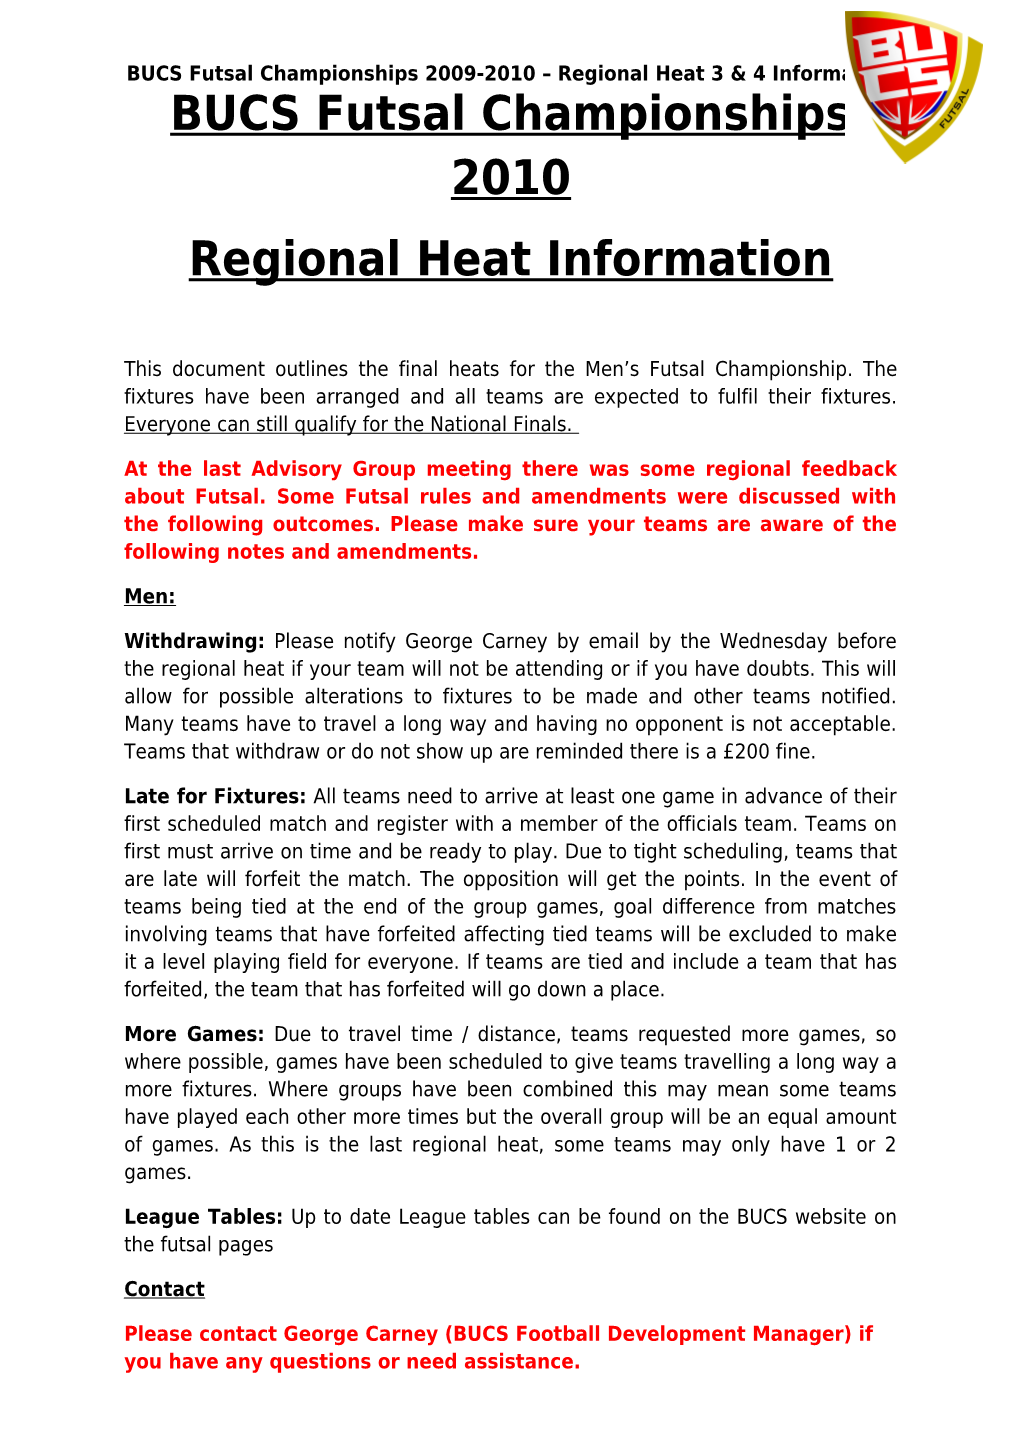 BUCS Futsal Championships 2009-2010 Regional Heat 3 & 4 Information